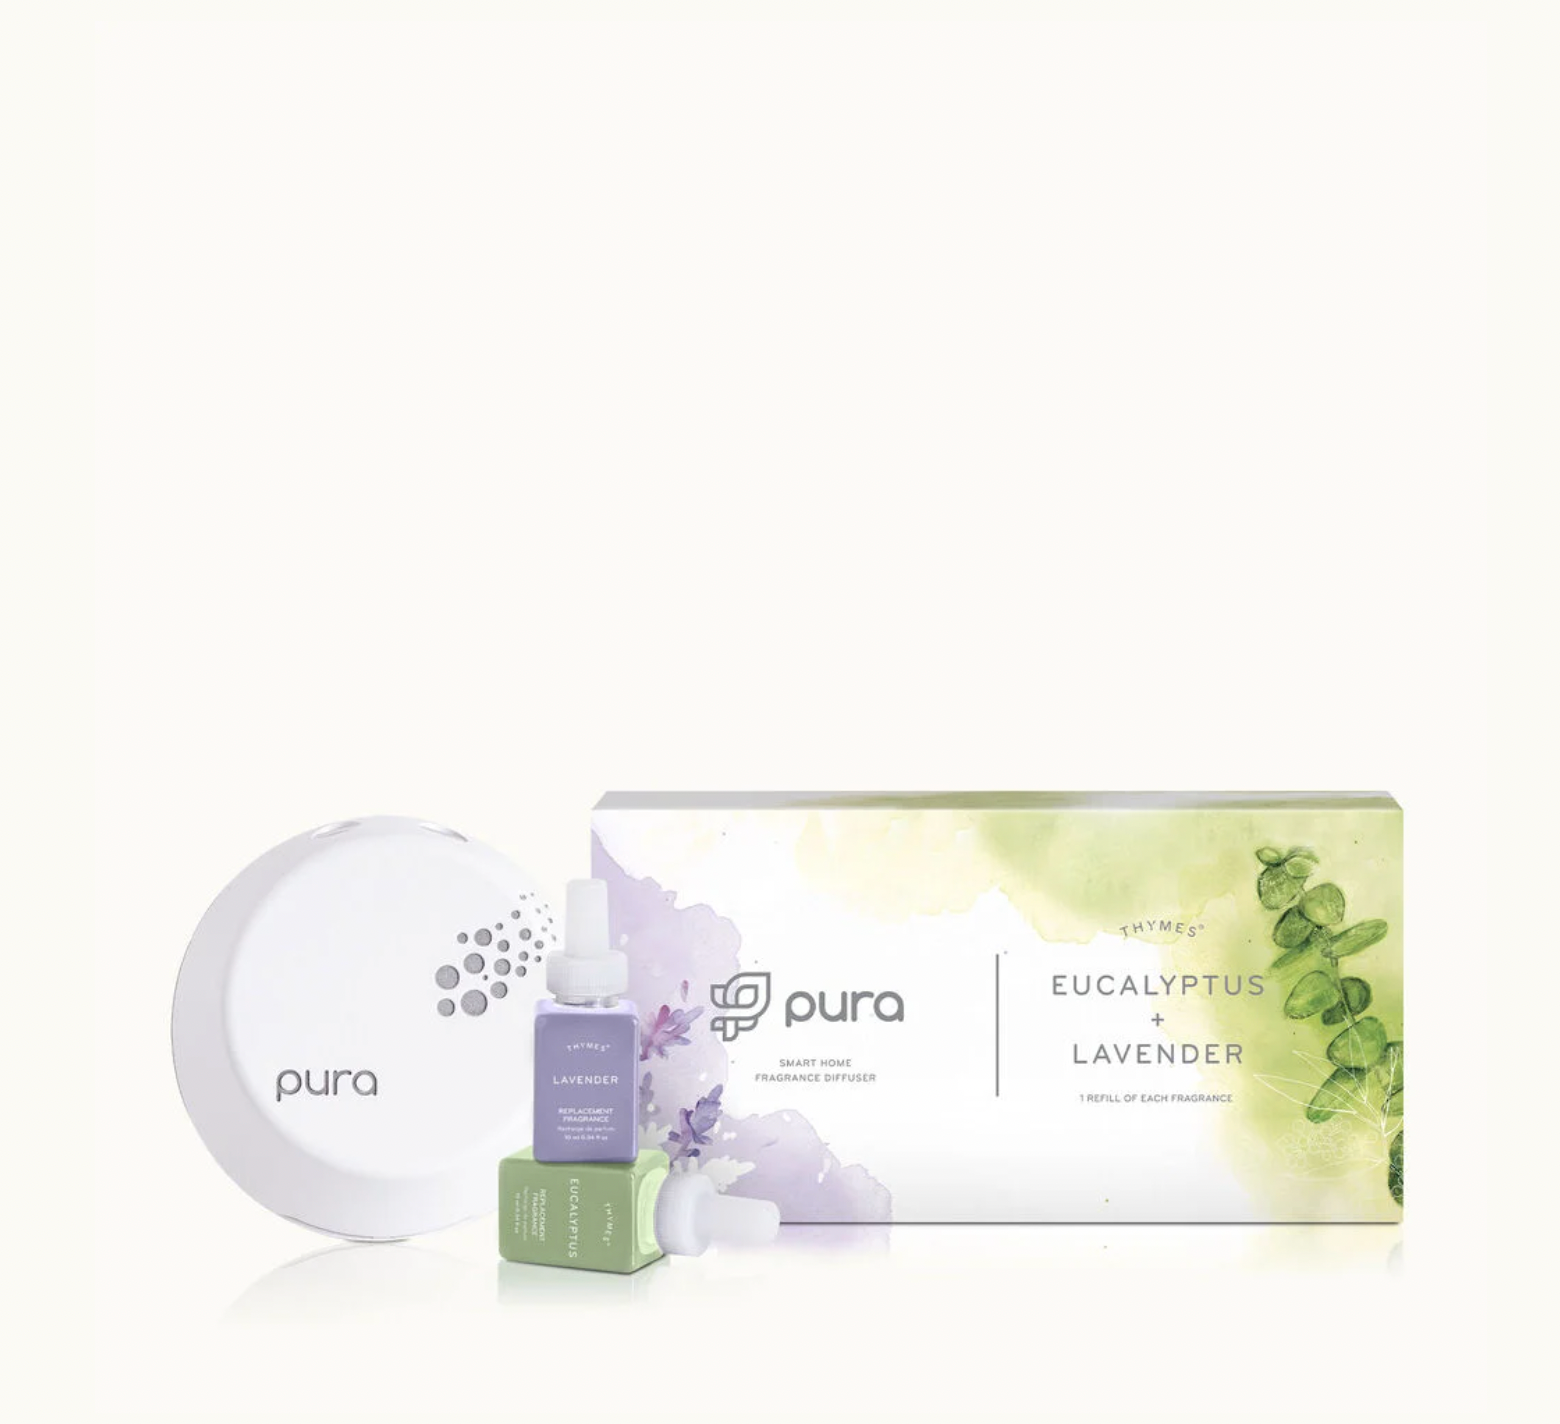 Lavender & Eucalyptus Pura Smart Home Diffuser Kit